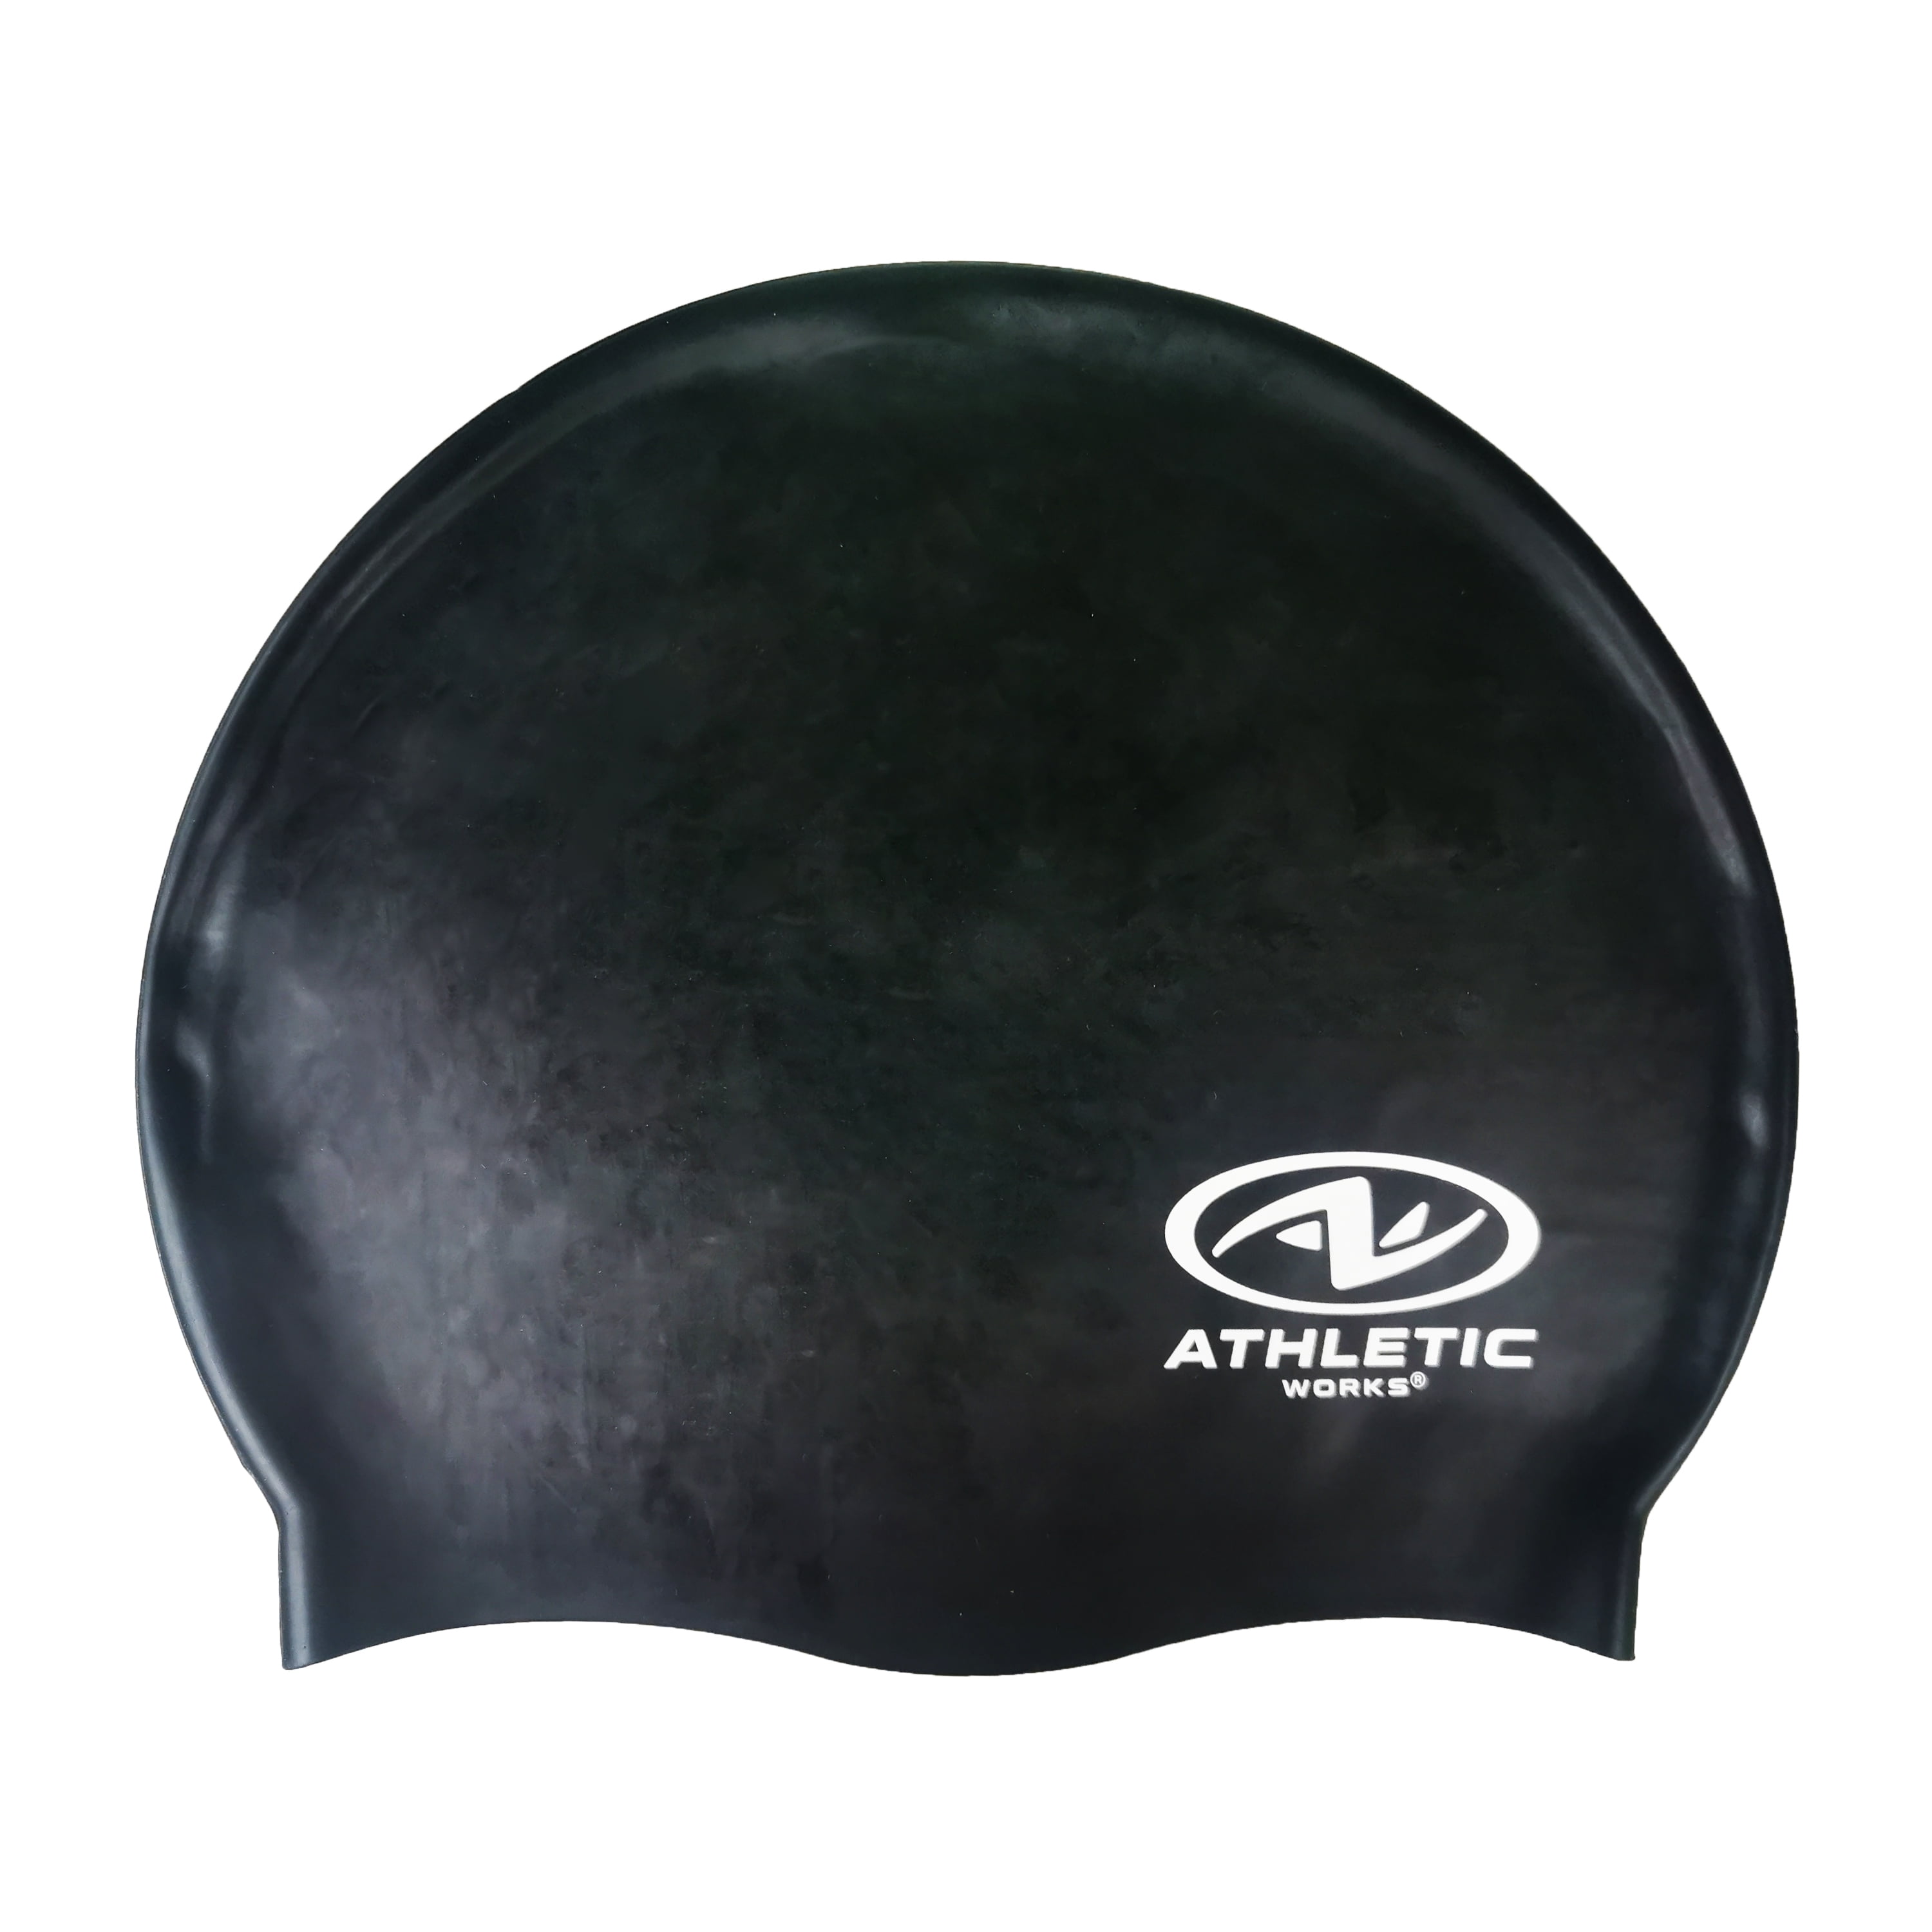 Adult swimming hat durable elastic silicone pool beach SWIM head CAP summer UK 